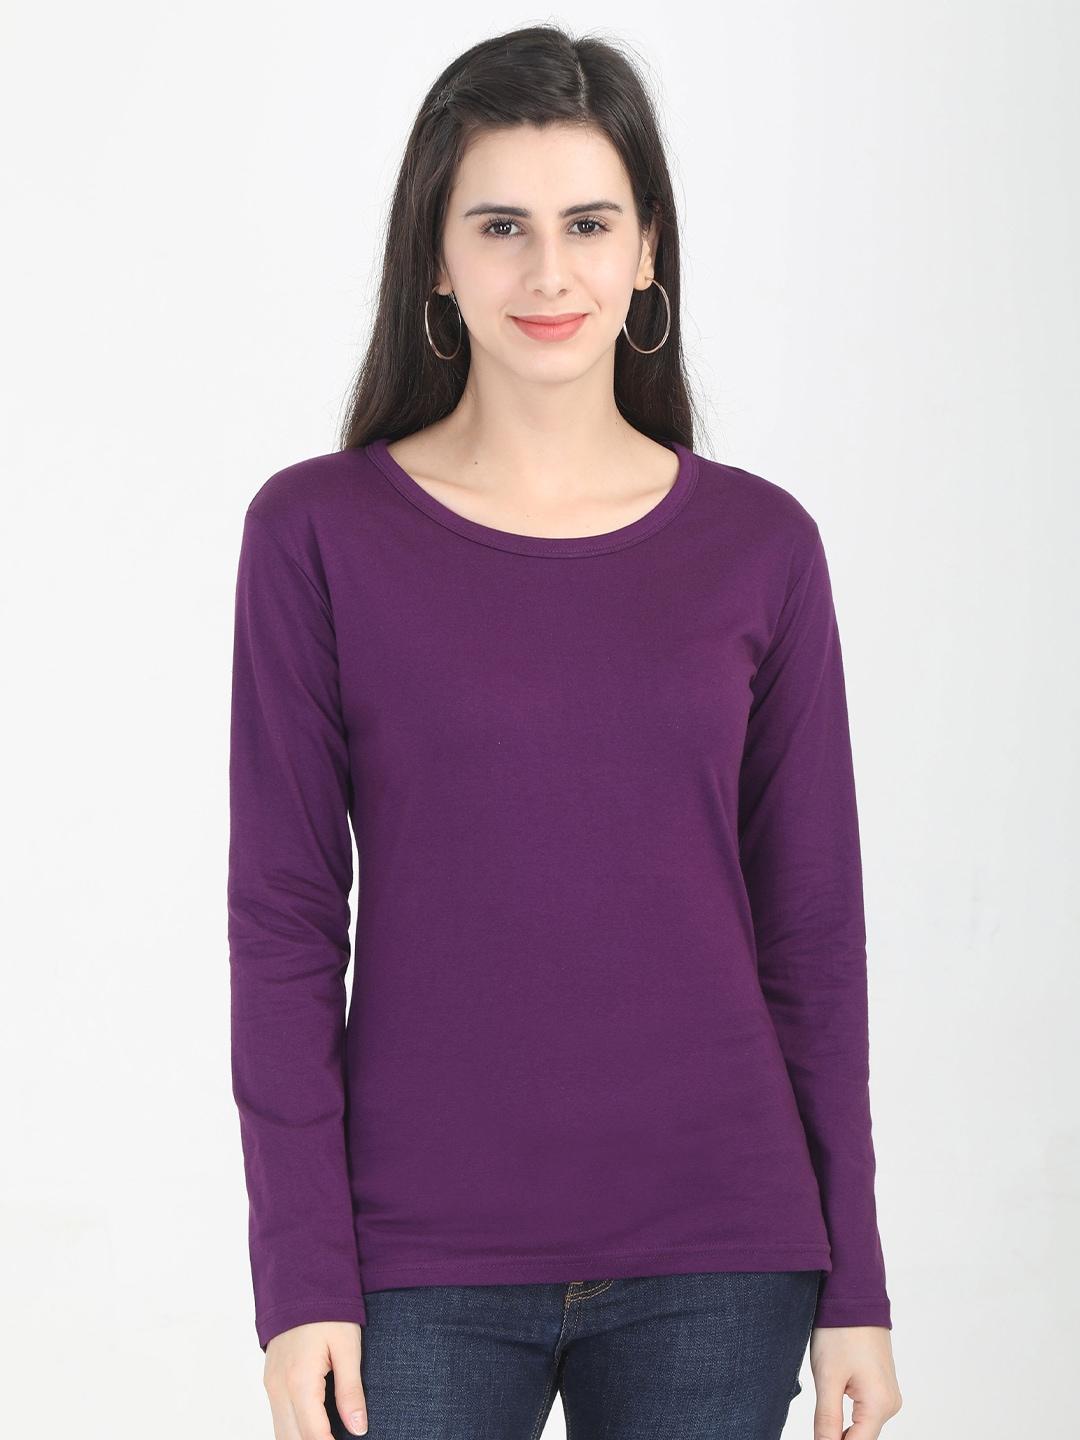 fleximaa-women-purple-cotton-t-shirt